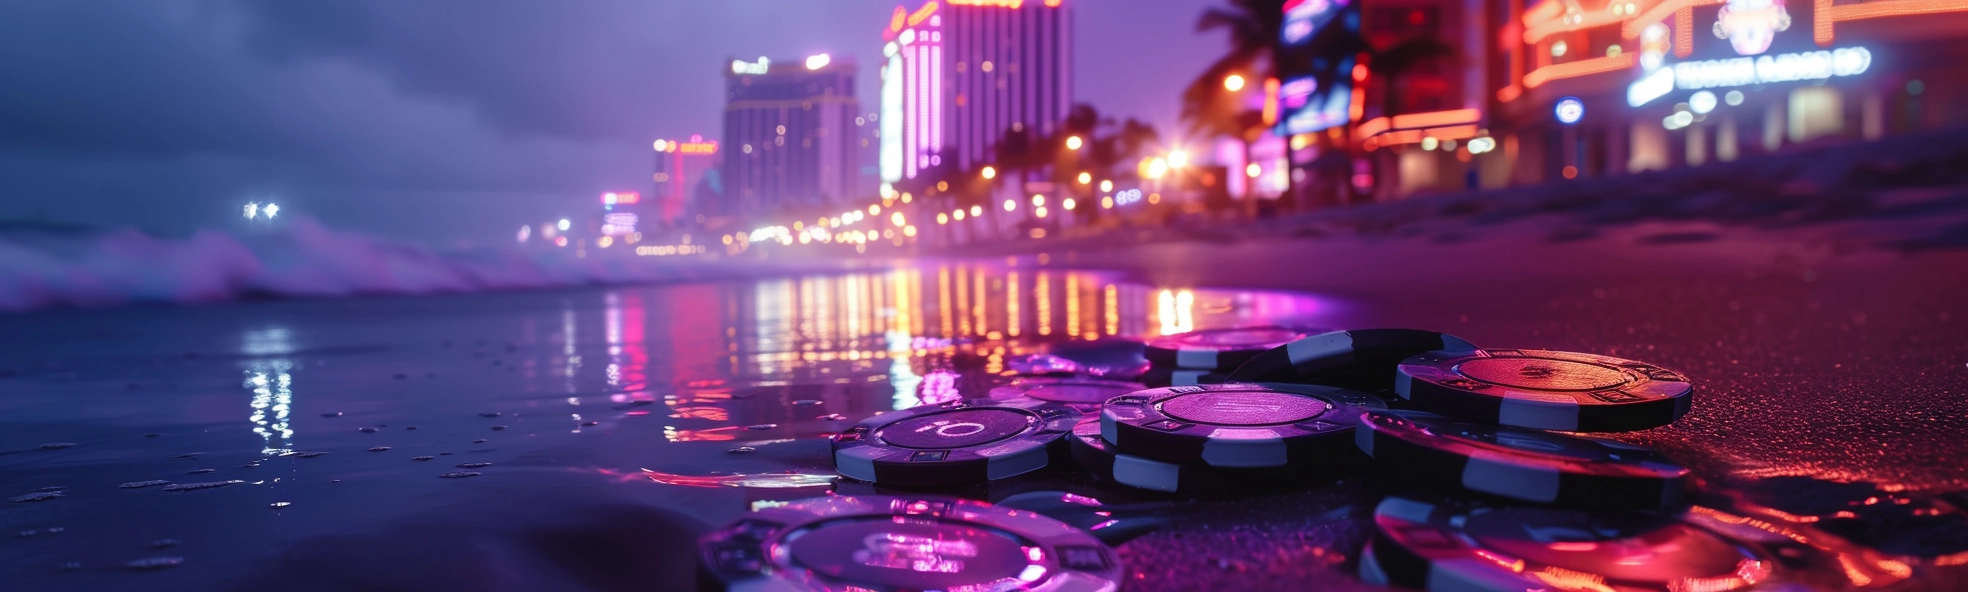 Atlantic City casinos image